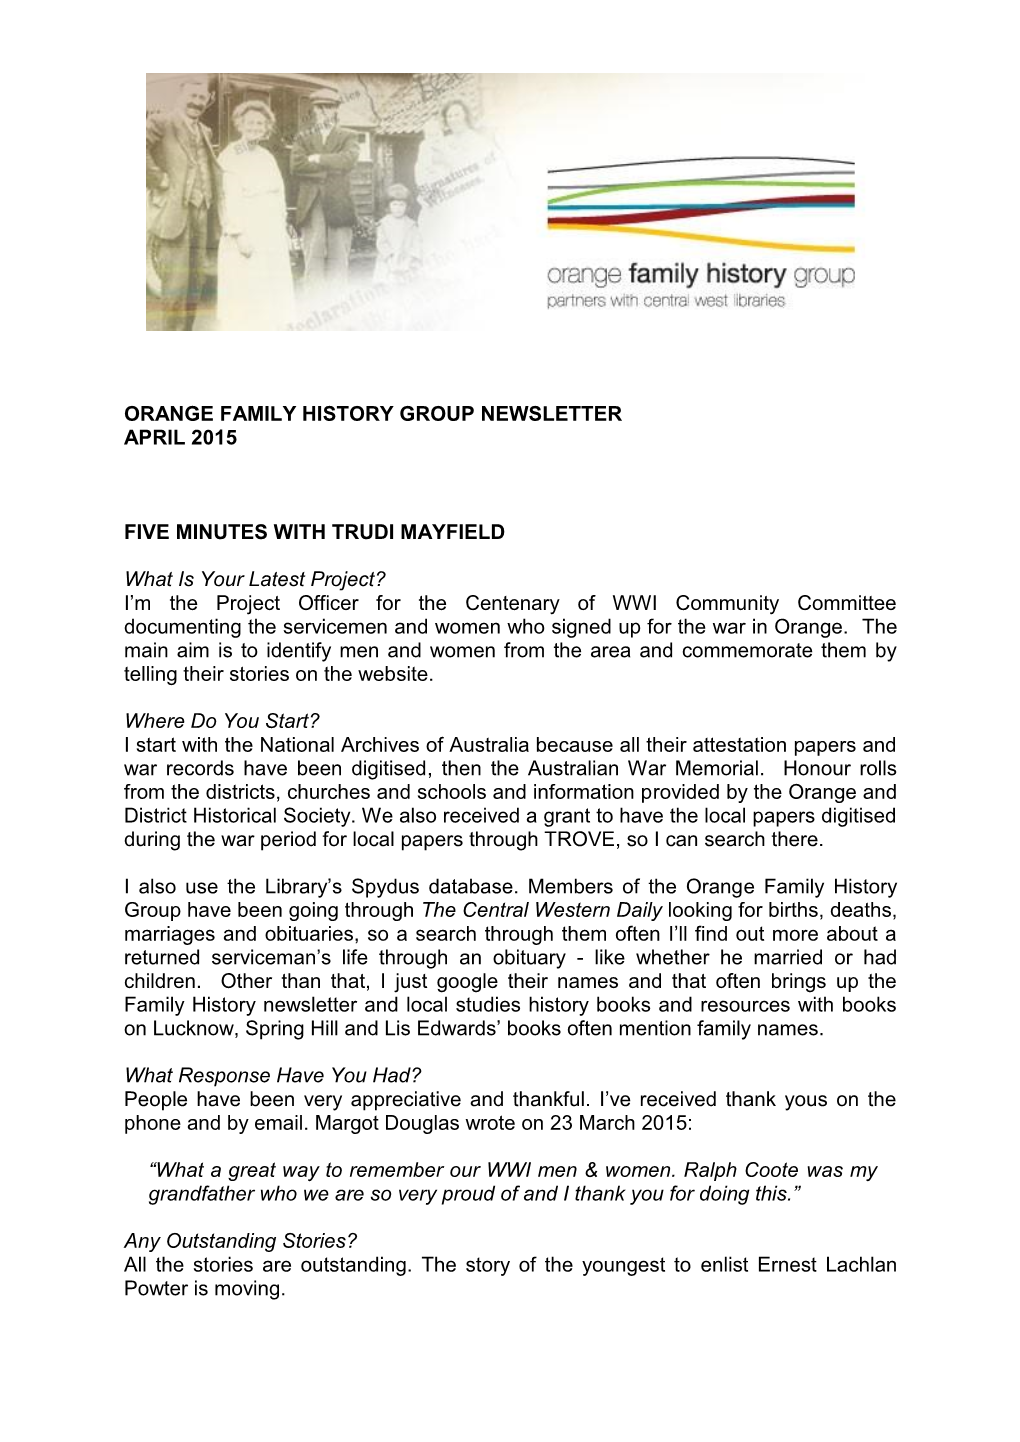 Orange Family History Group Newsletter April 2015 Five